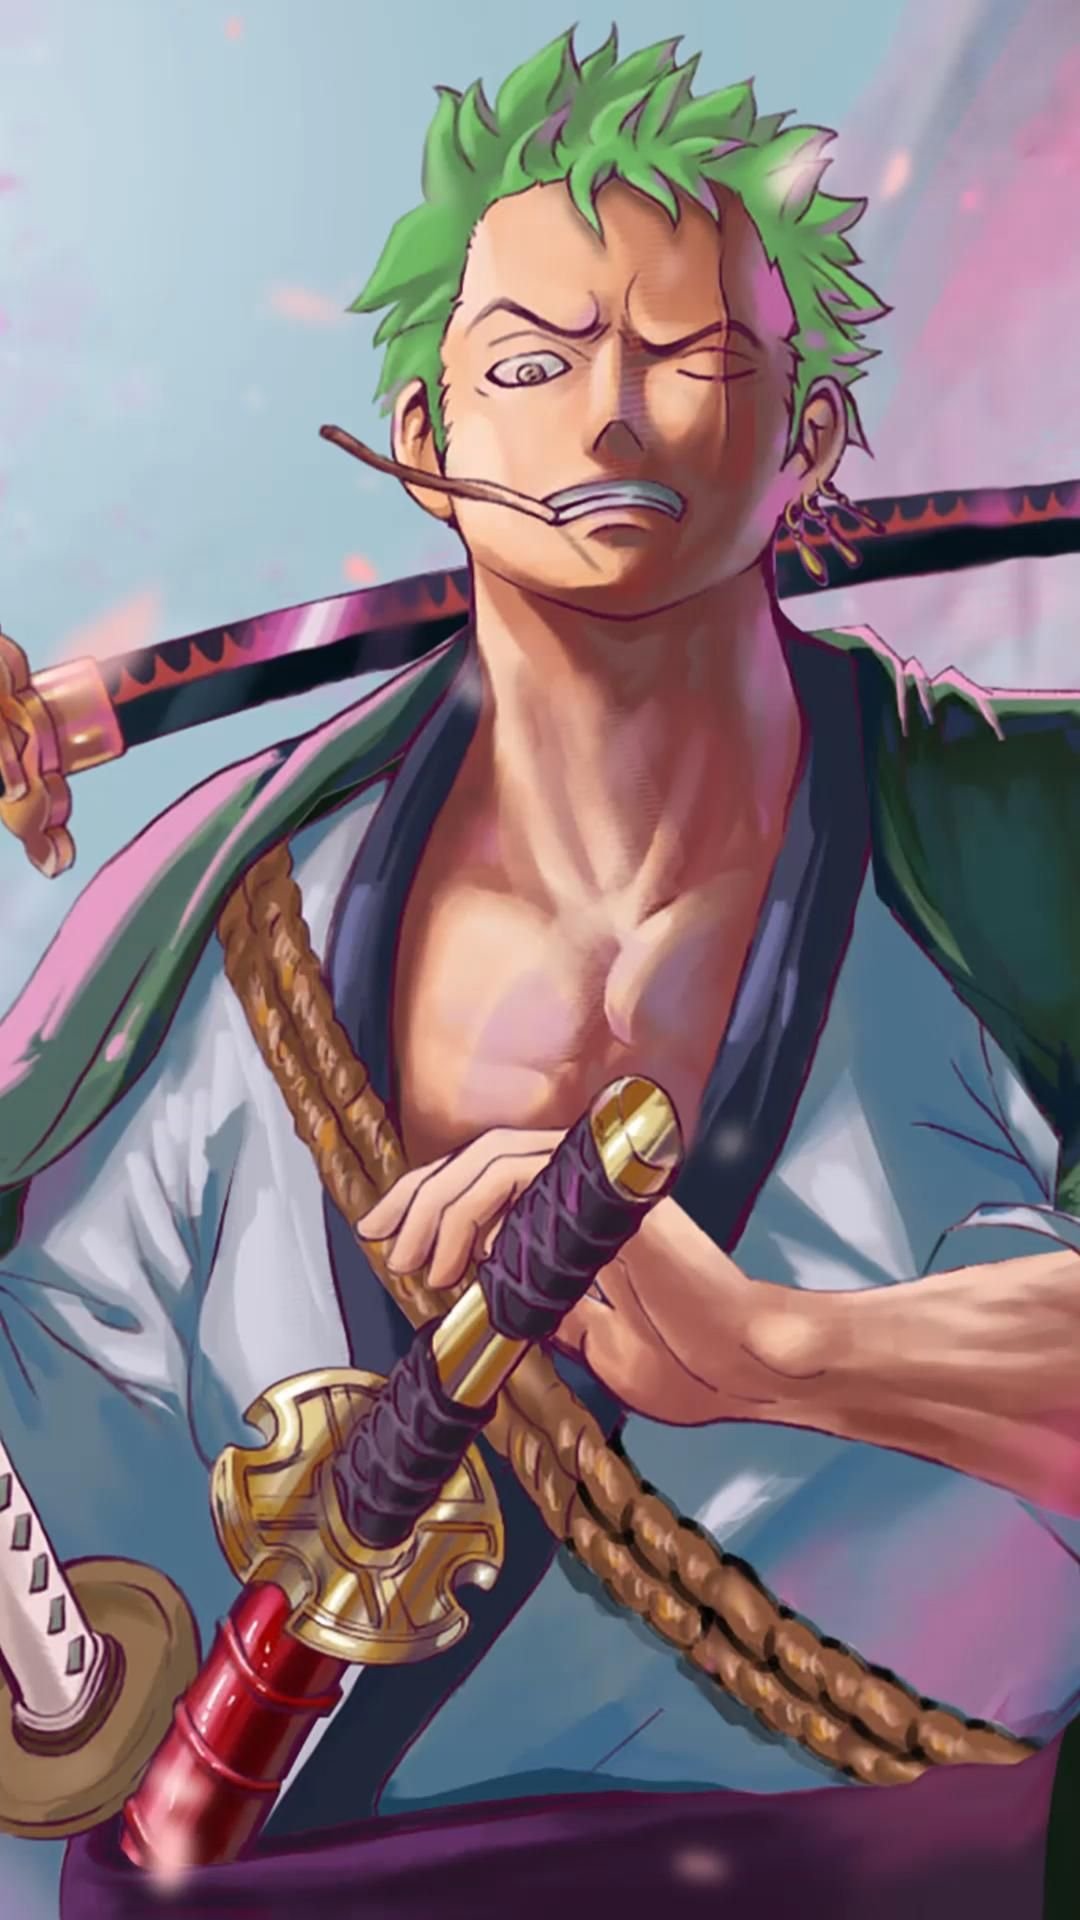 Roronoa Zoro - One Piece Wallpaper Download